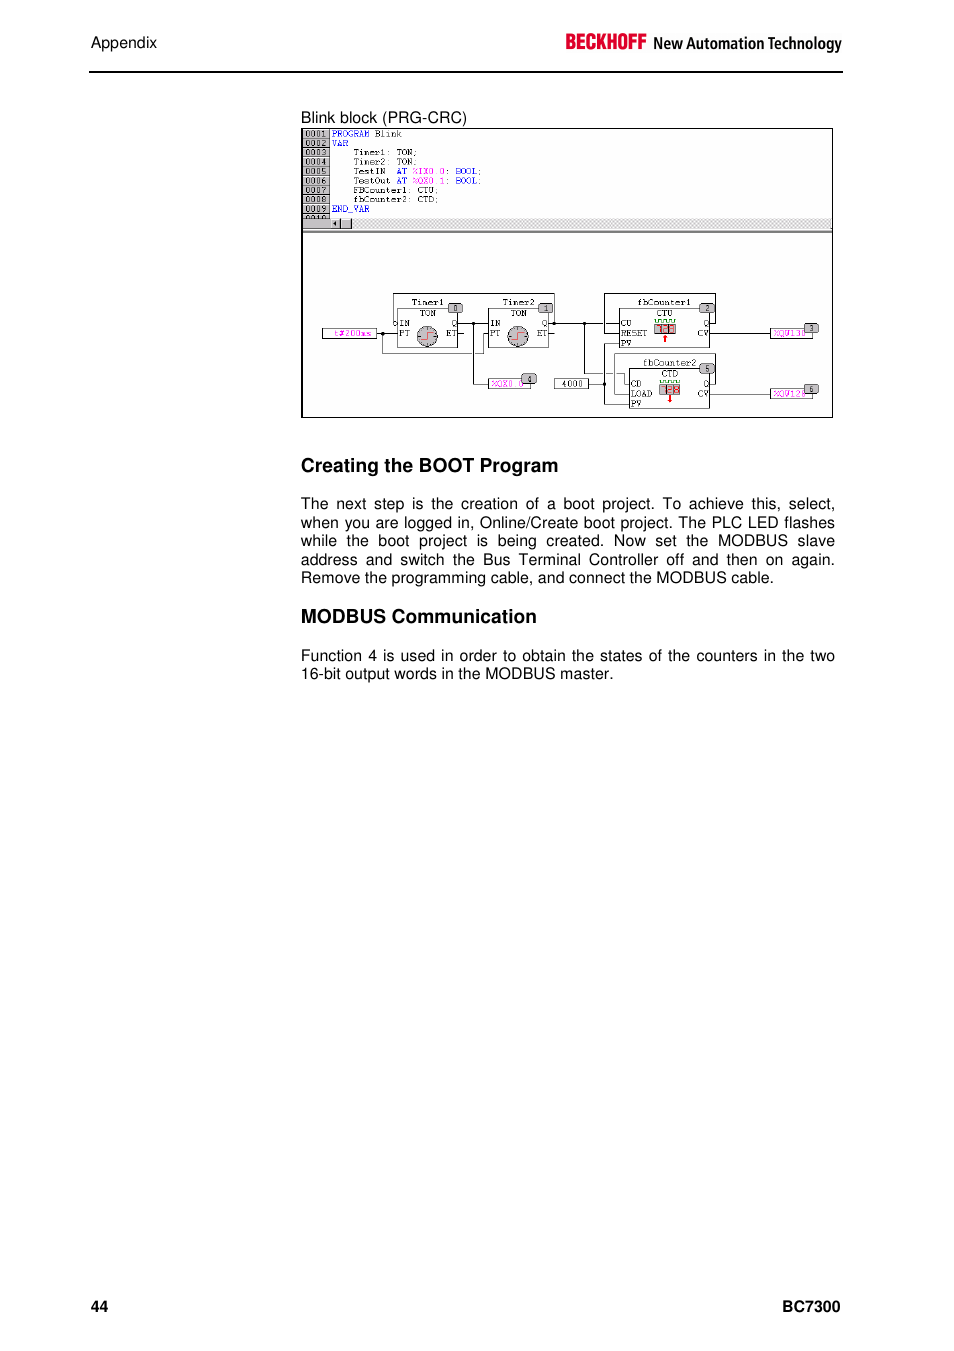 Creating the boot program, Modbus communication | BECKHOFF BC7300 User  Manual | Page 44 / 48 | Original mode